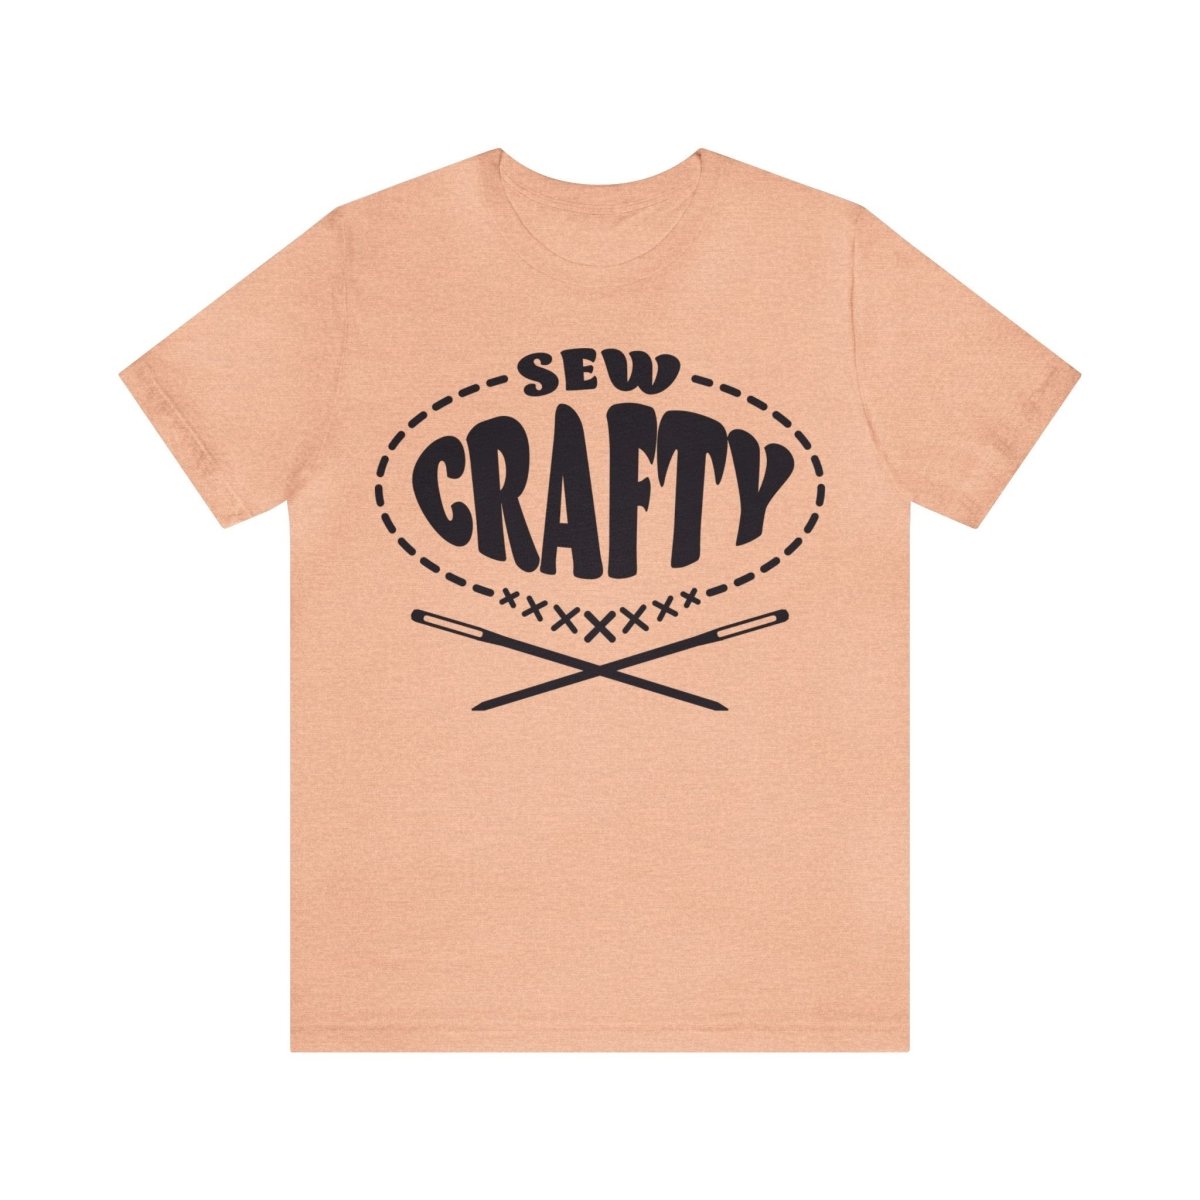 Sew Crafty Premium T-Shirt, Sewing, Stitch, Needlepoint, Embroidery, Craft